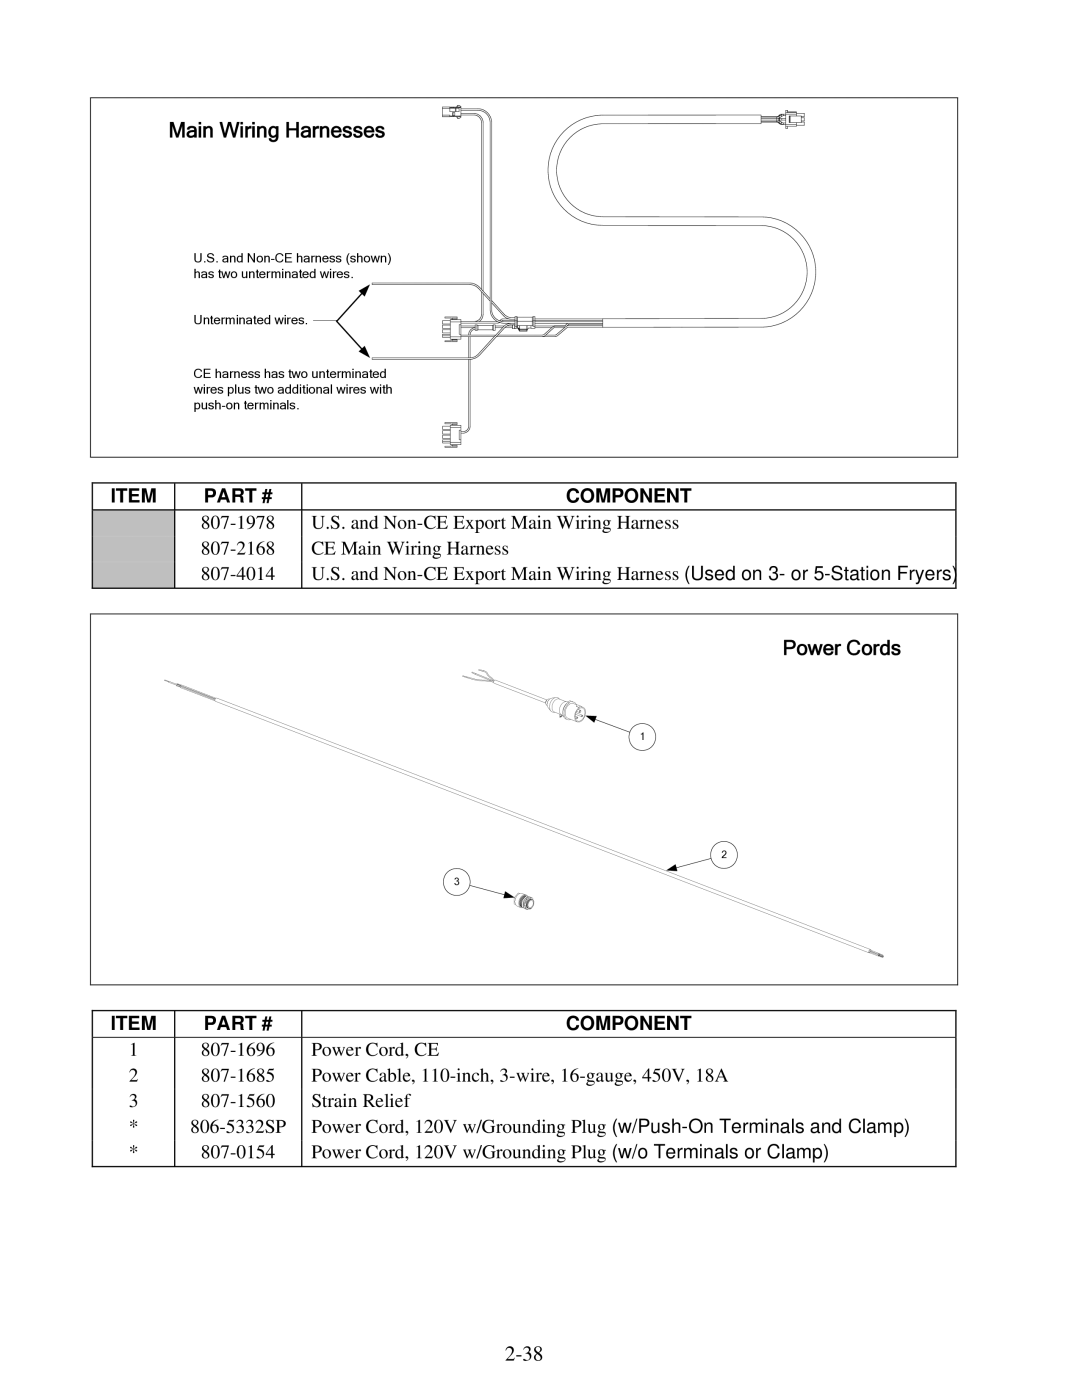 Frymaster H50 manual Main Wiring Harnesses 